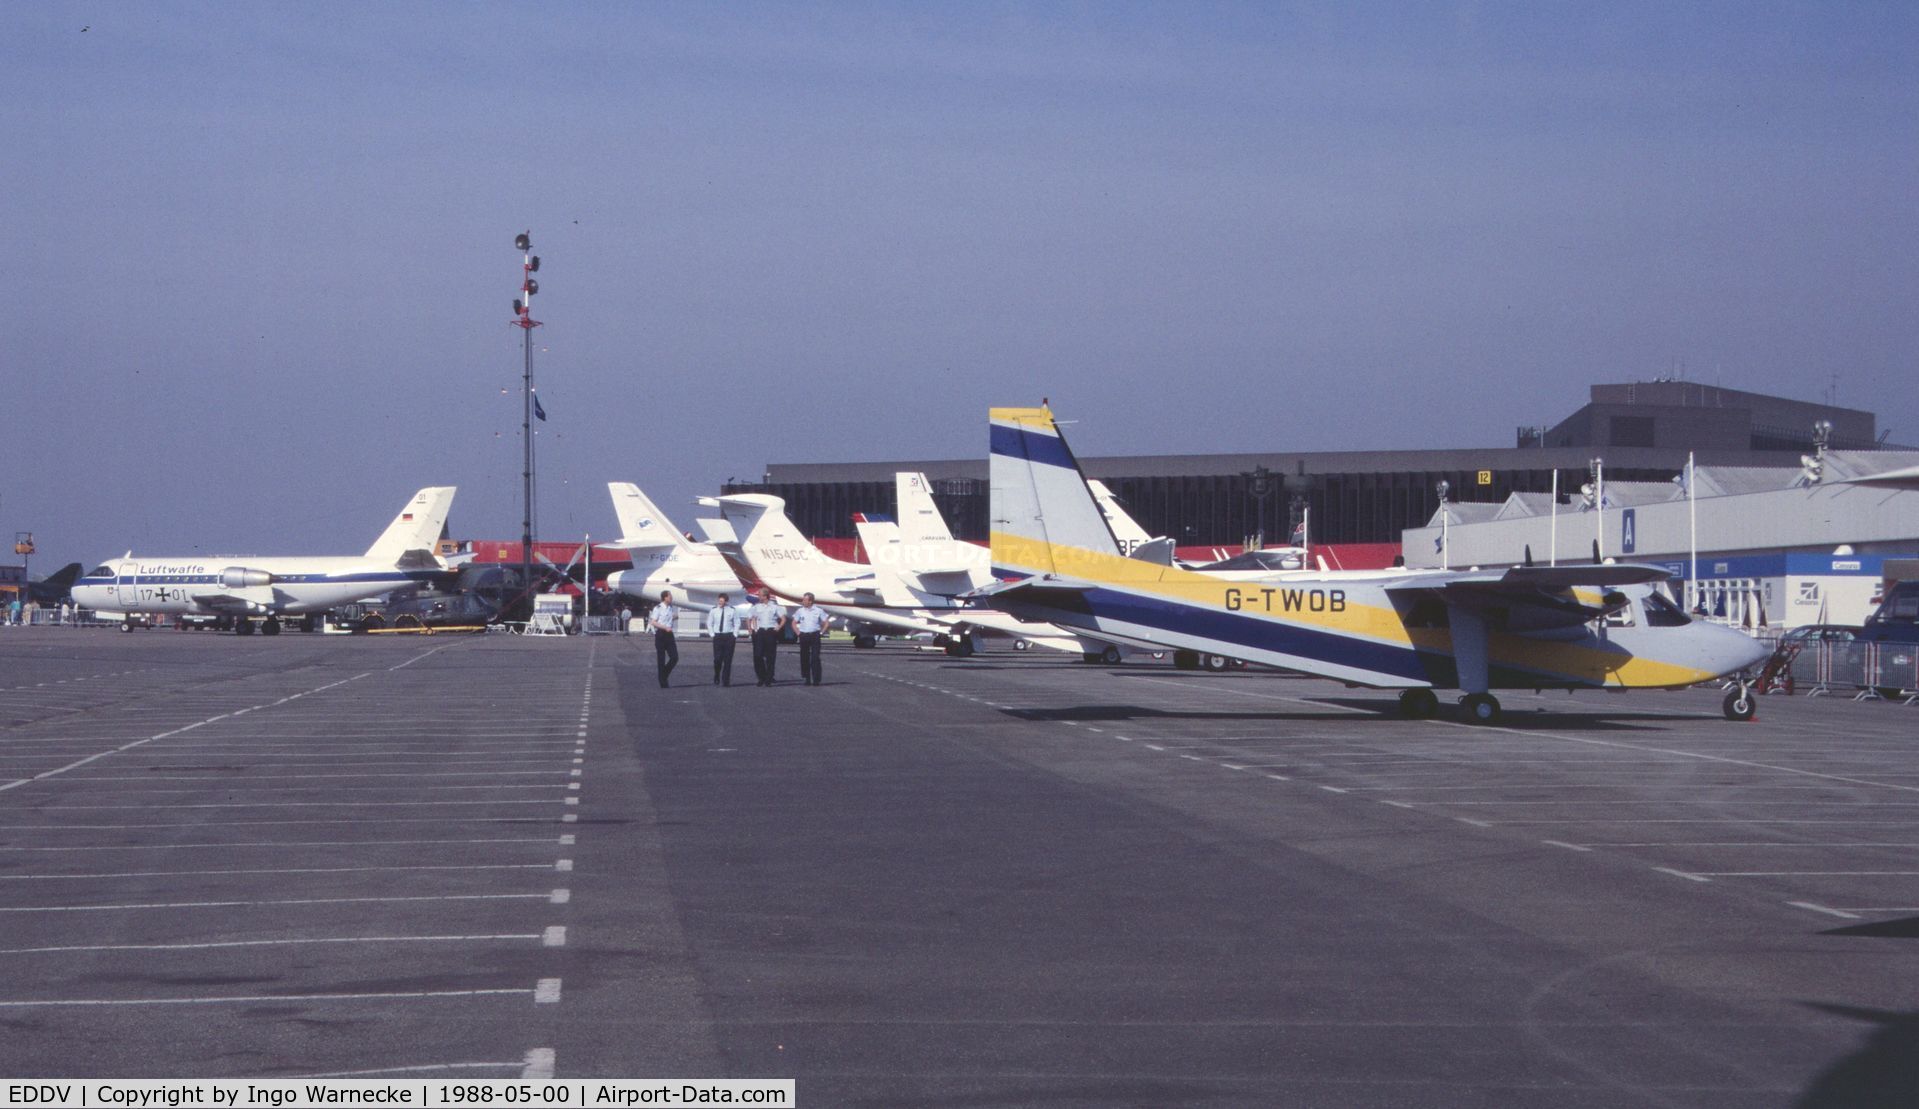 Hanover/Langenhagen International Airport, Hanover Germany (EDDV) - static exhibition area of the Internationale Luftfahrtaustellung ILA 1988, Langenhagen airport